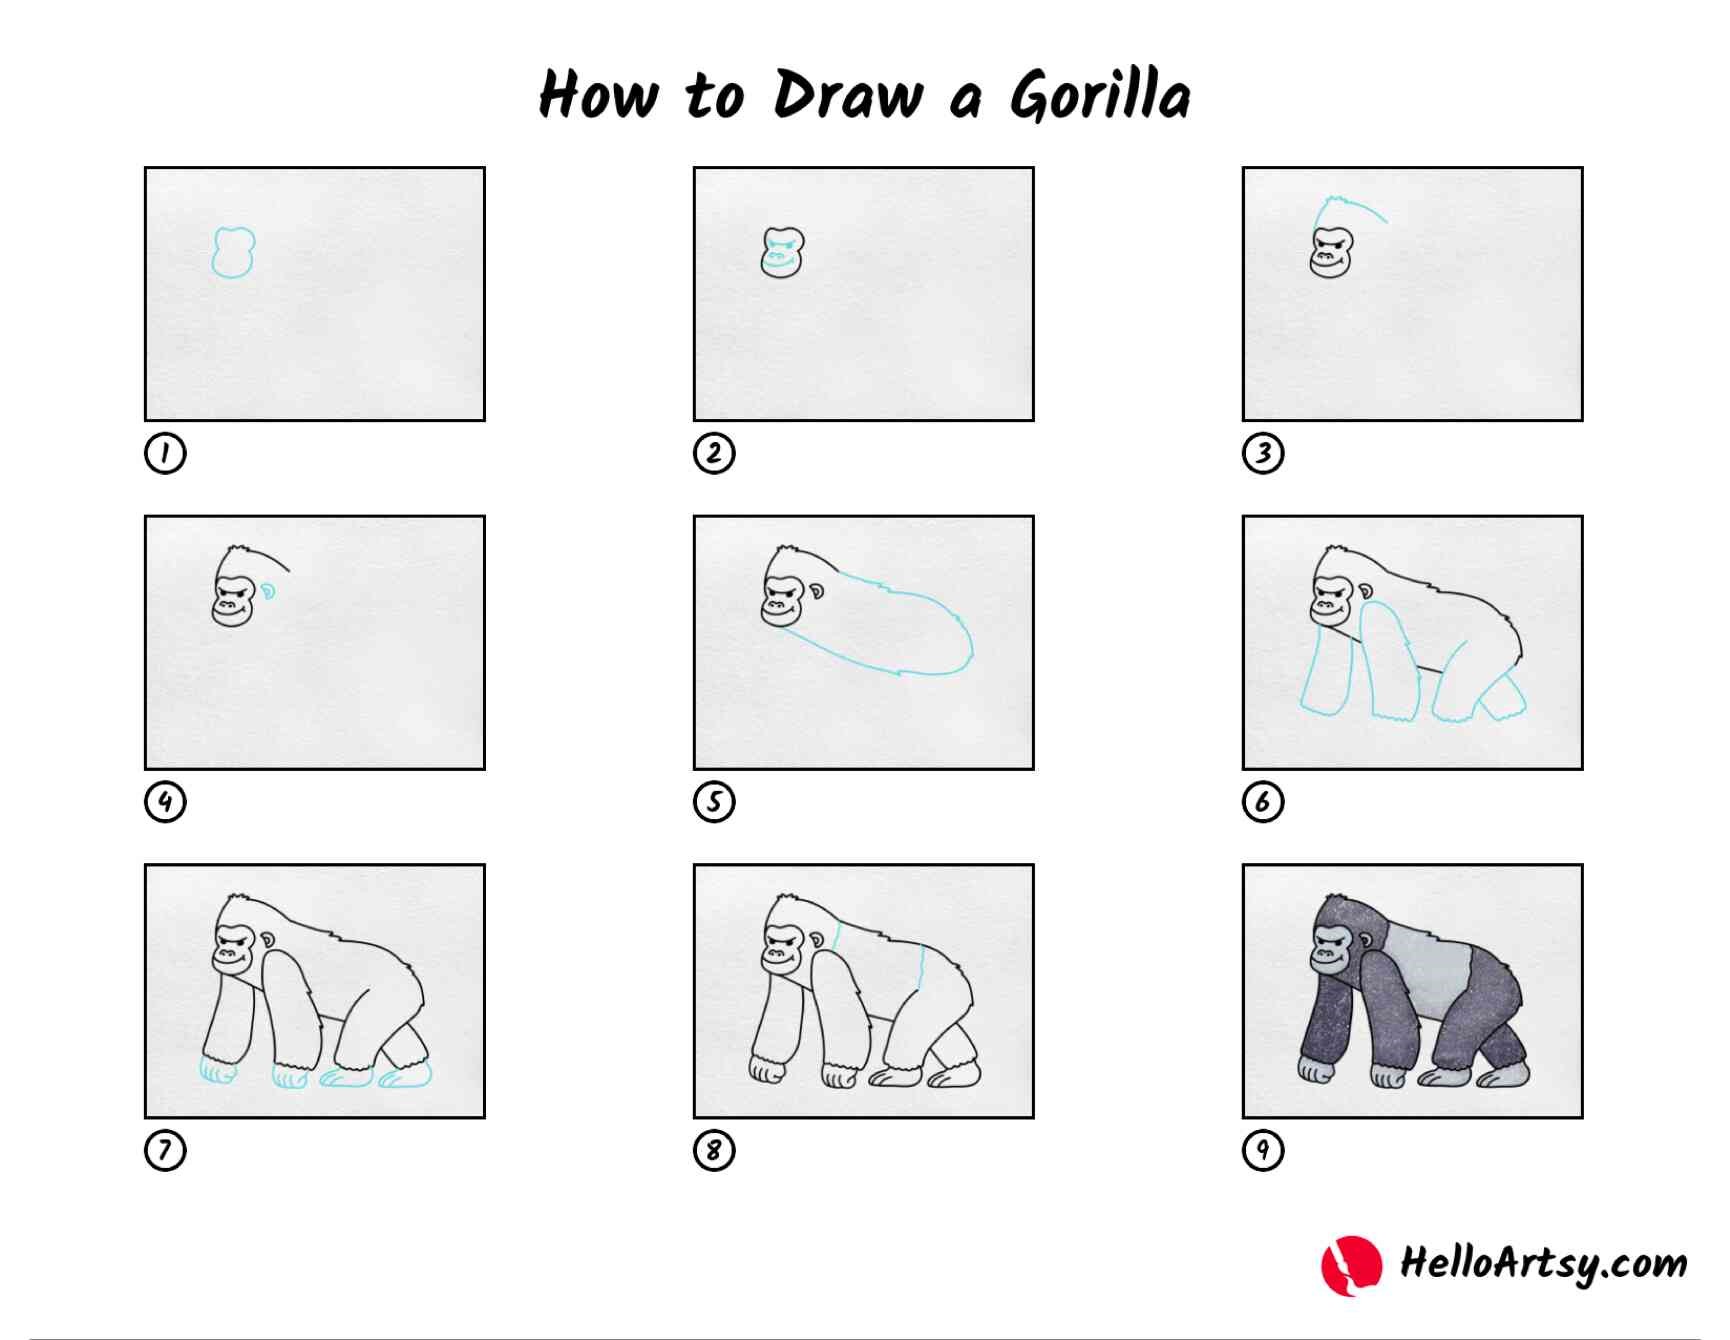 Gorilla Ideas 8 Drawing Ideas